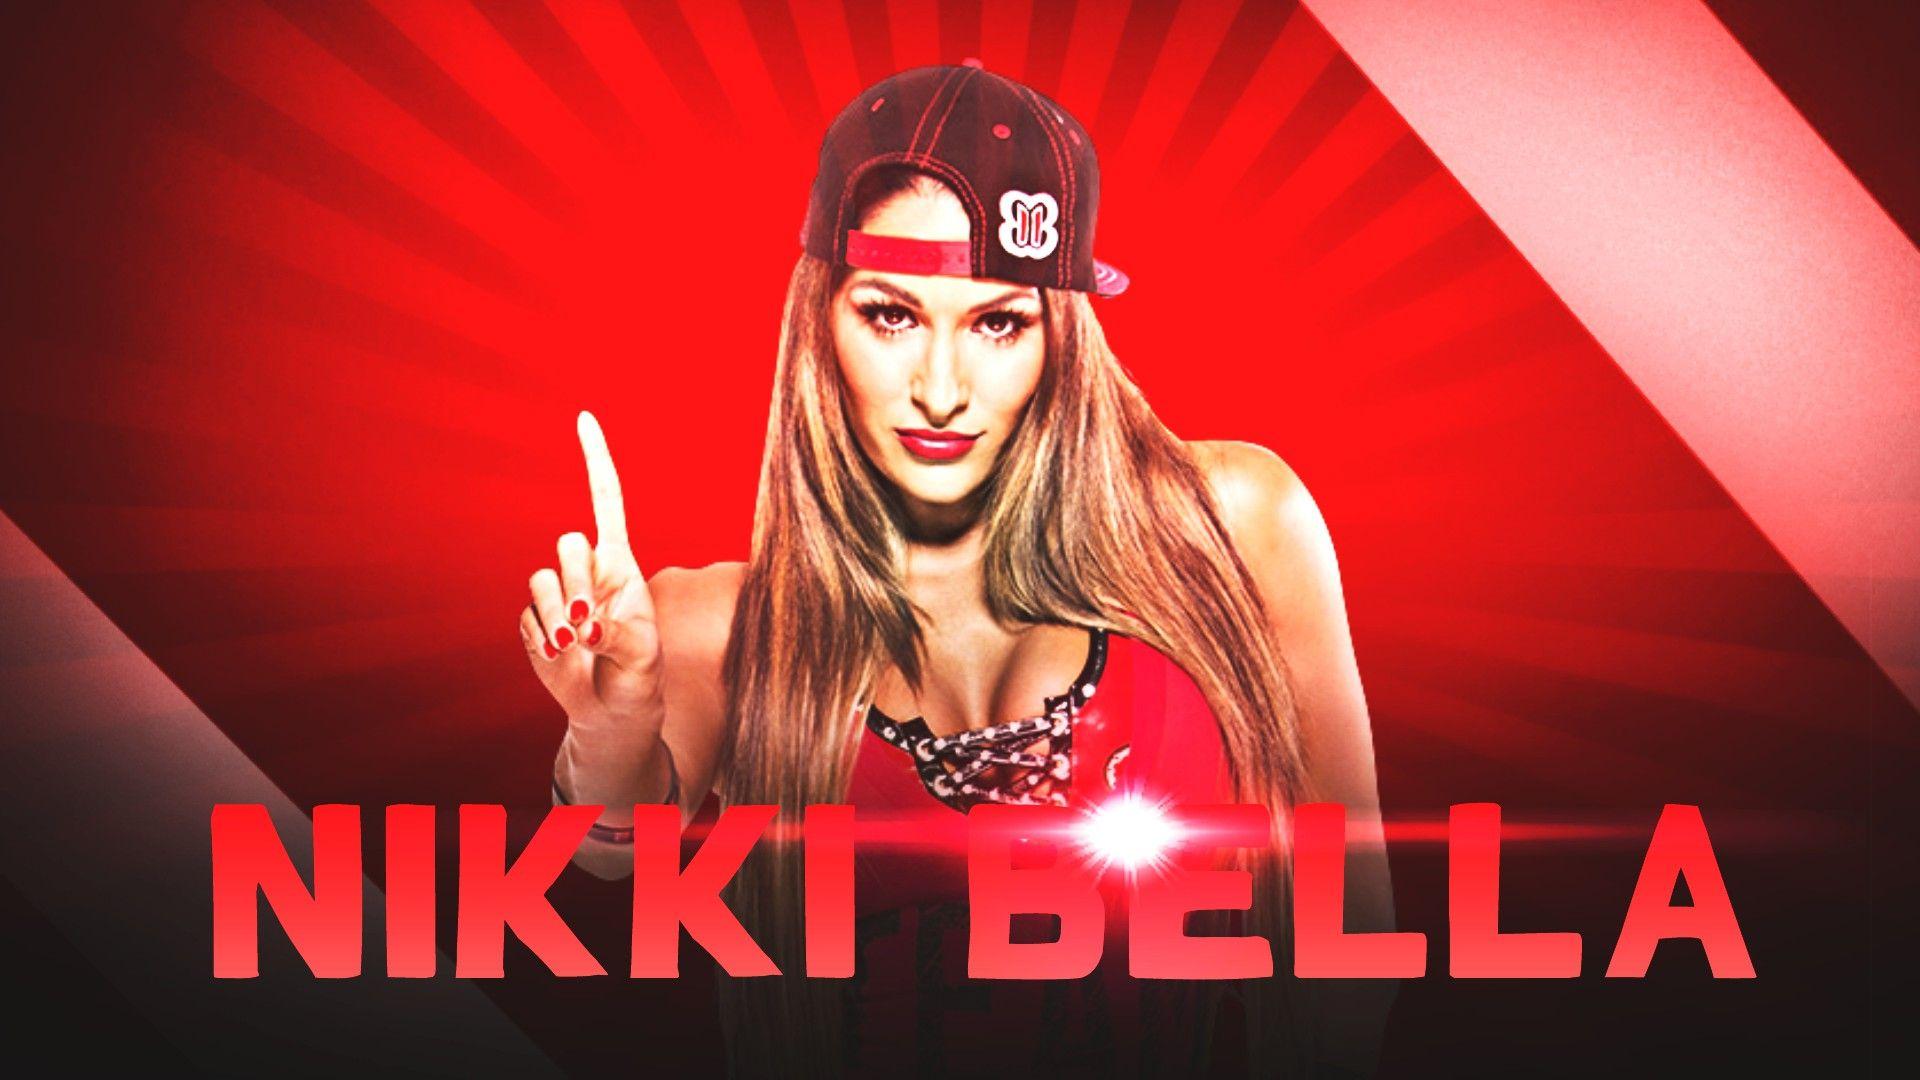 WWE Nikki Bella 2015 Wallpaper, 45 Best HD Photo of WWE Nikki